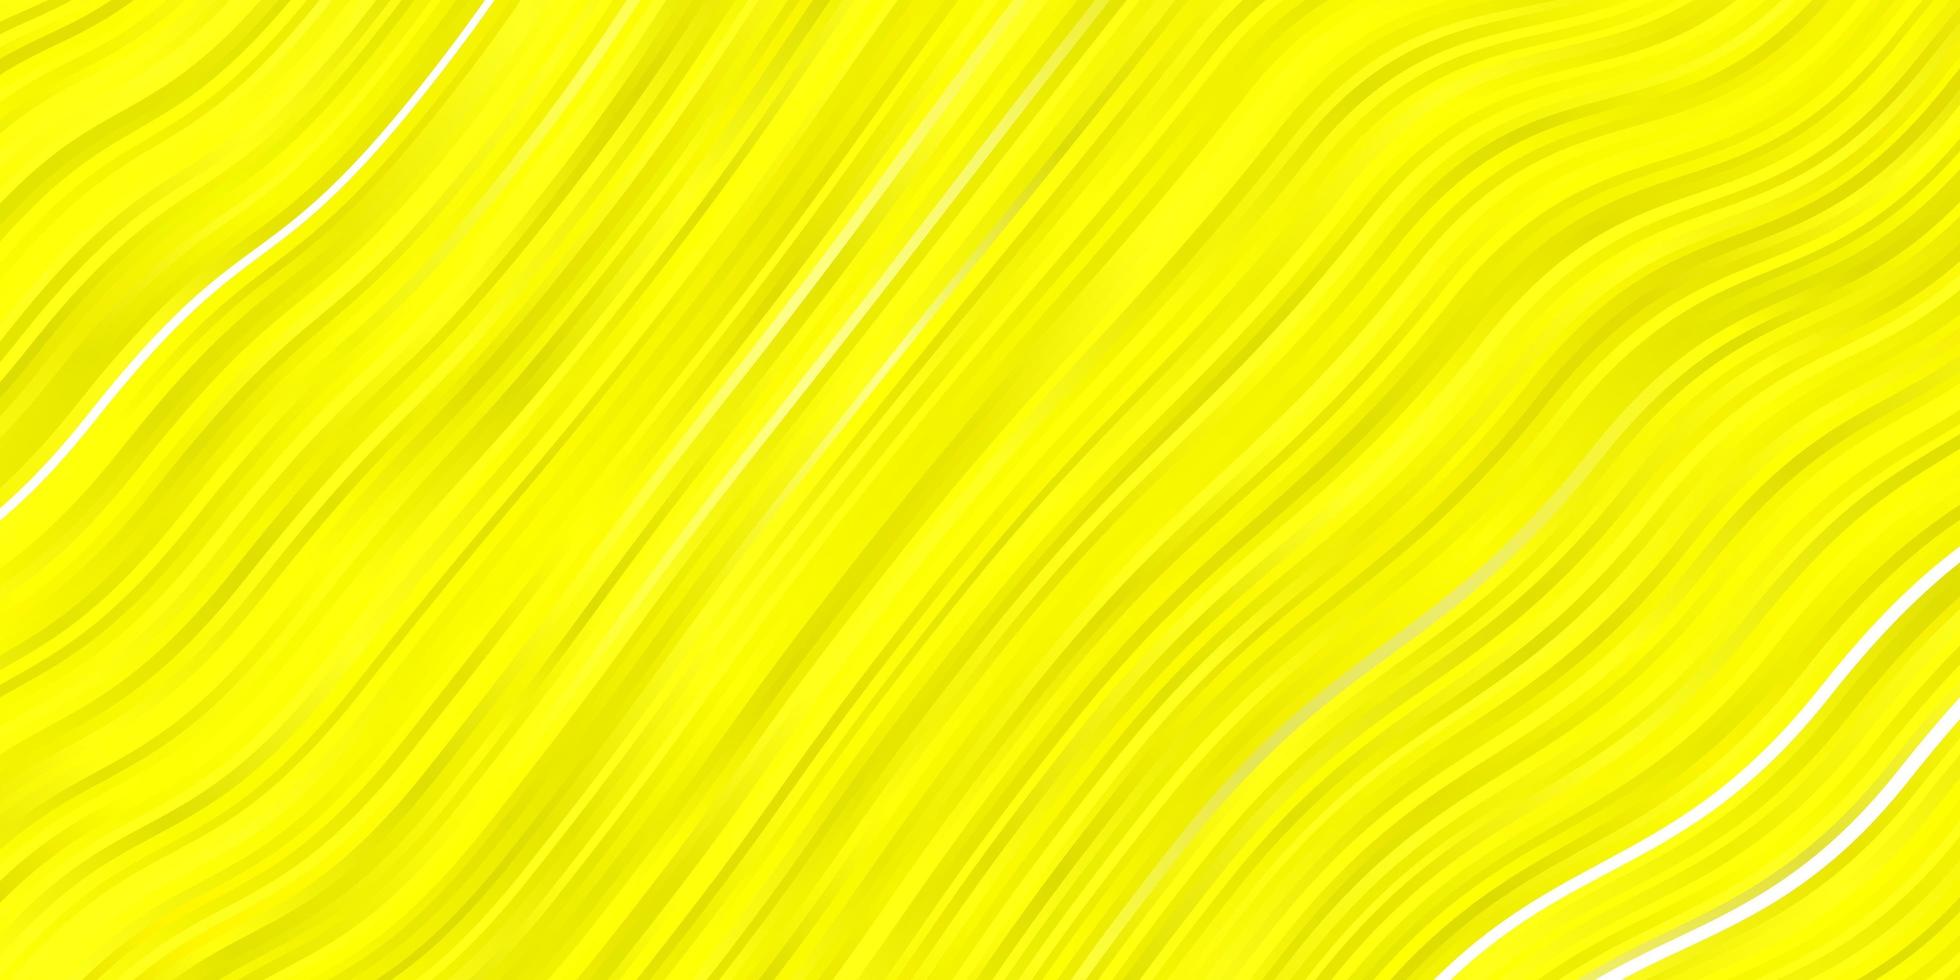 textura de vector amarillo claro con arco circular nueva ilustración colorida con patrón de líneas dobladas para folletos folletos